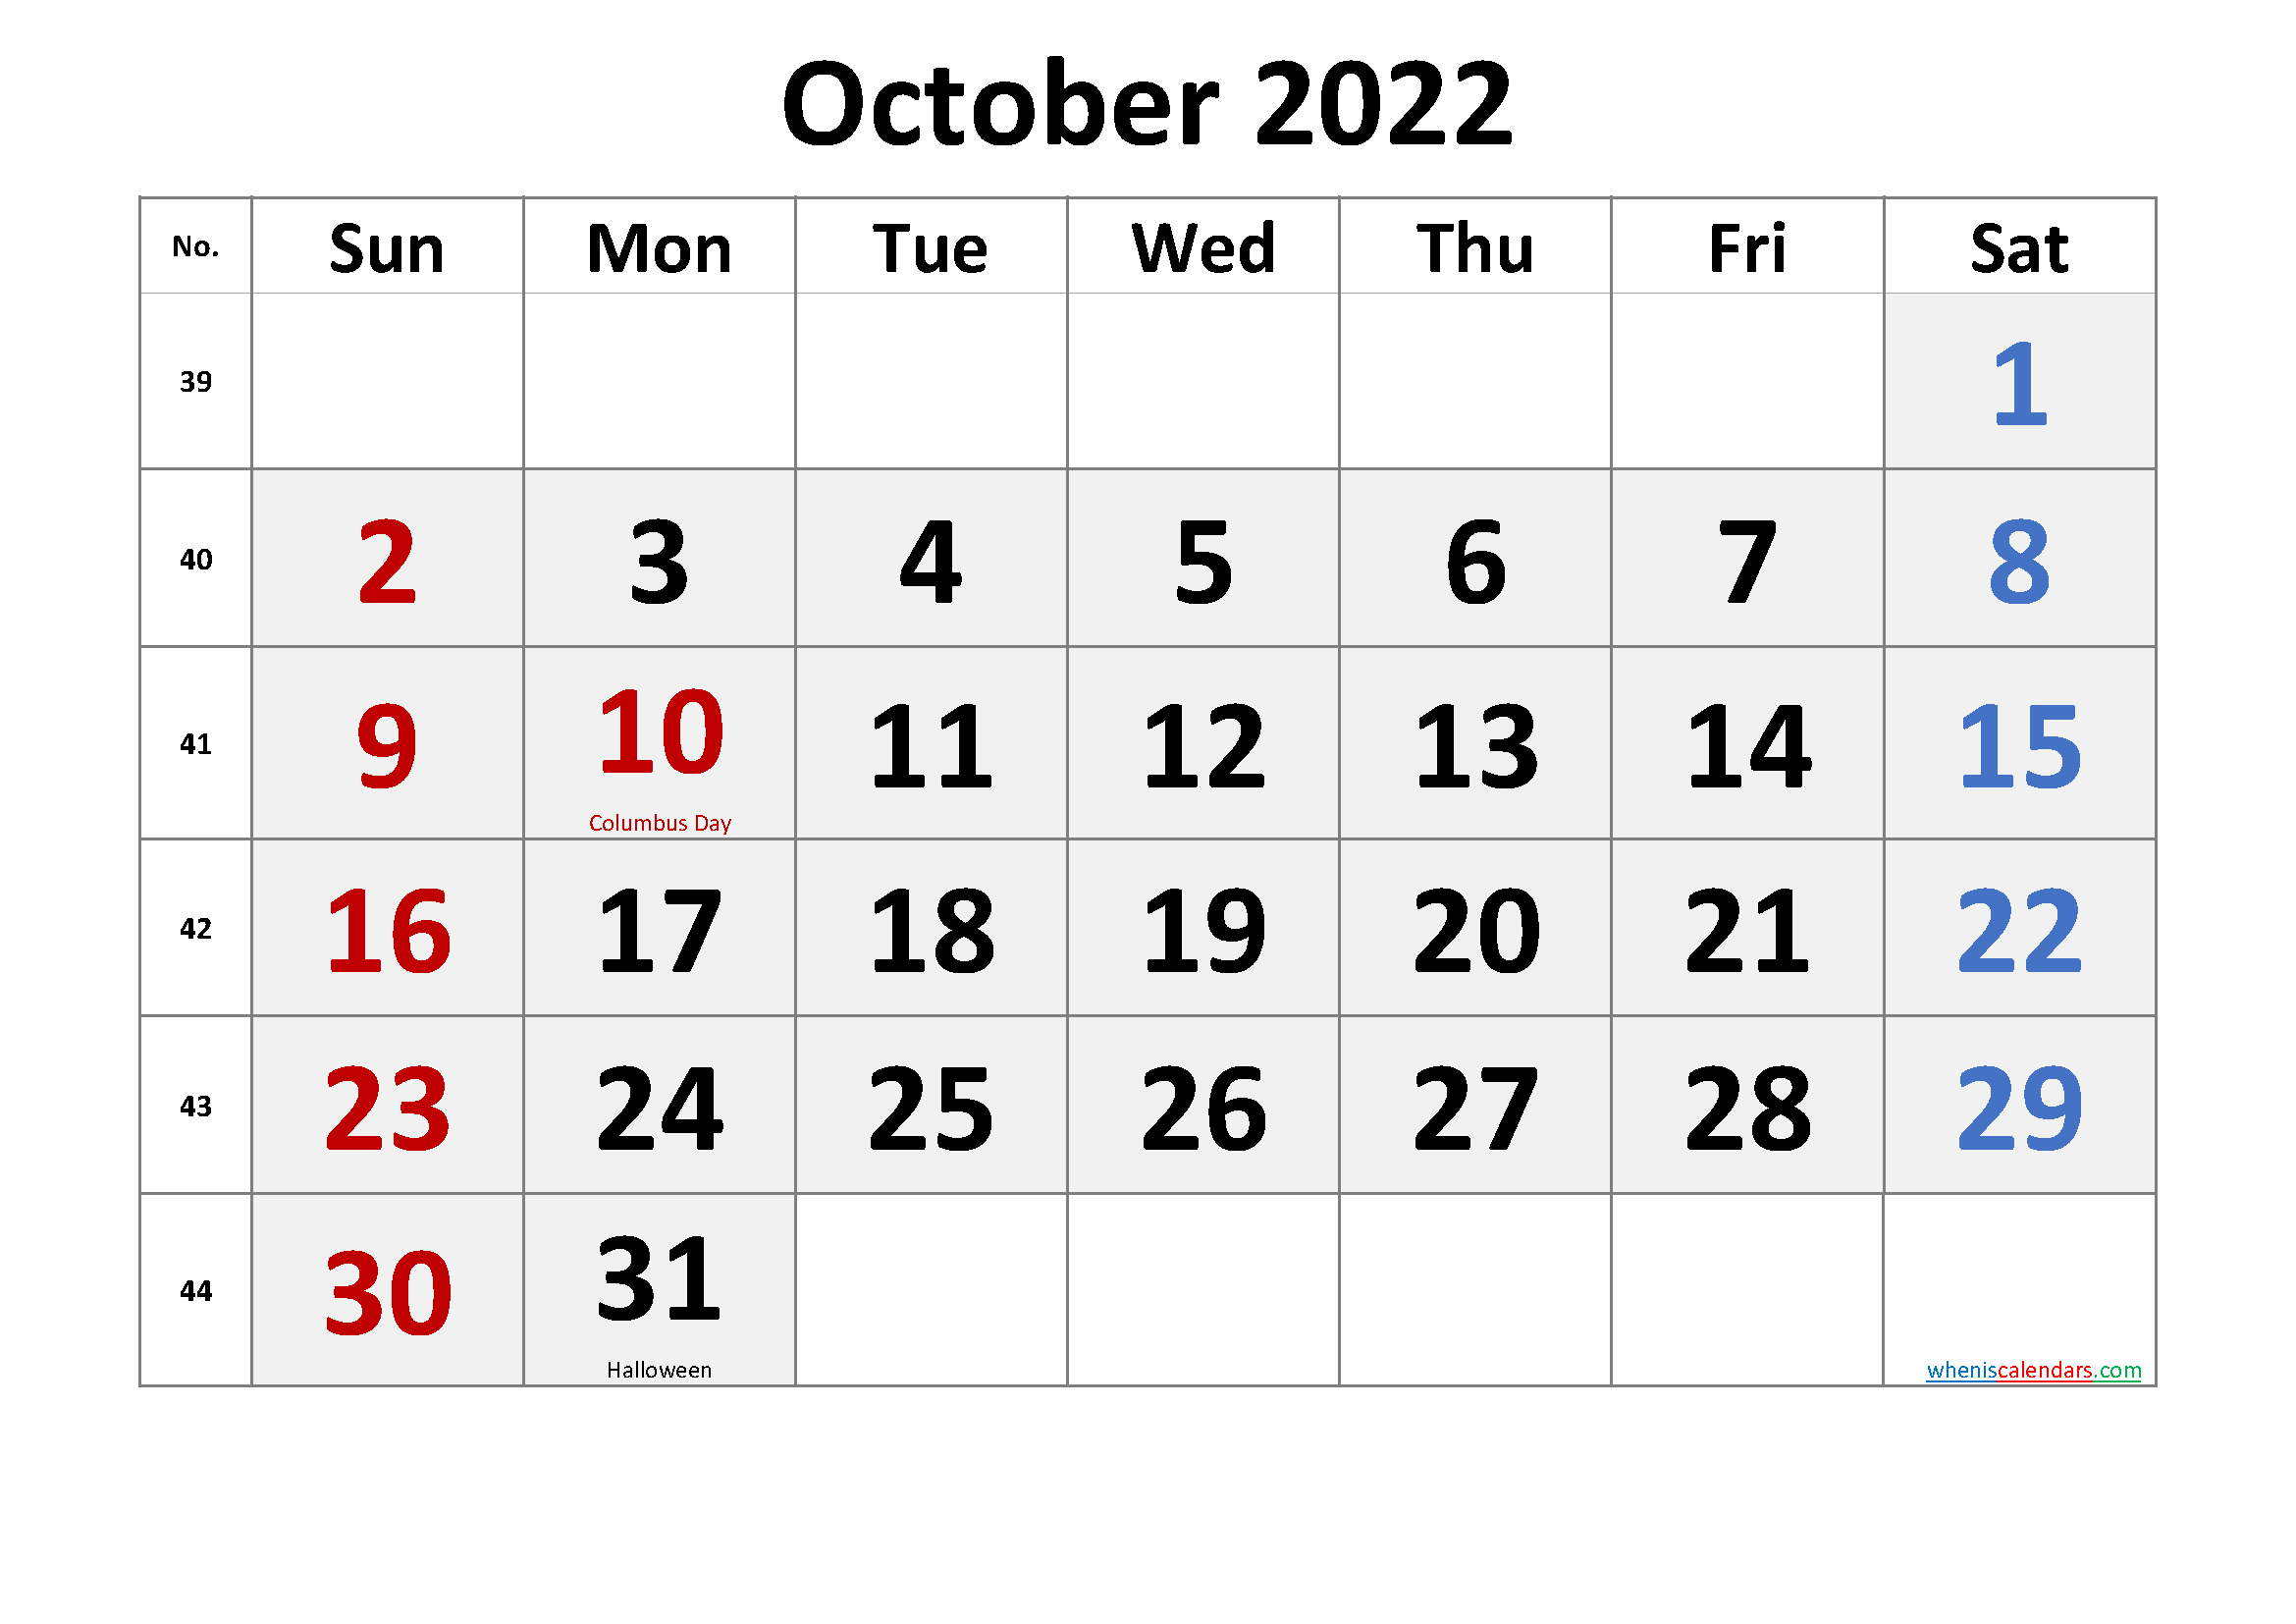 Get Calendar October 2021 To 2022